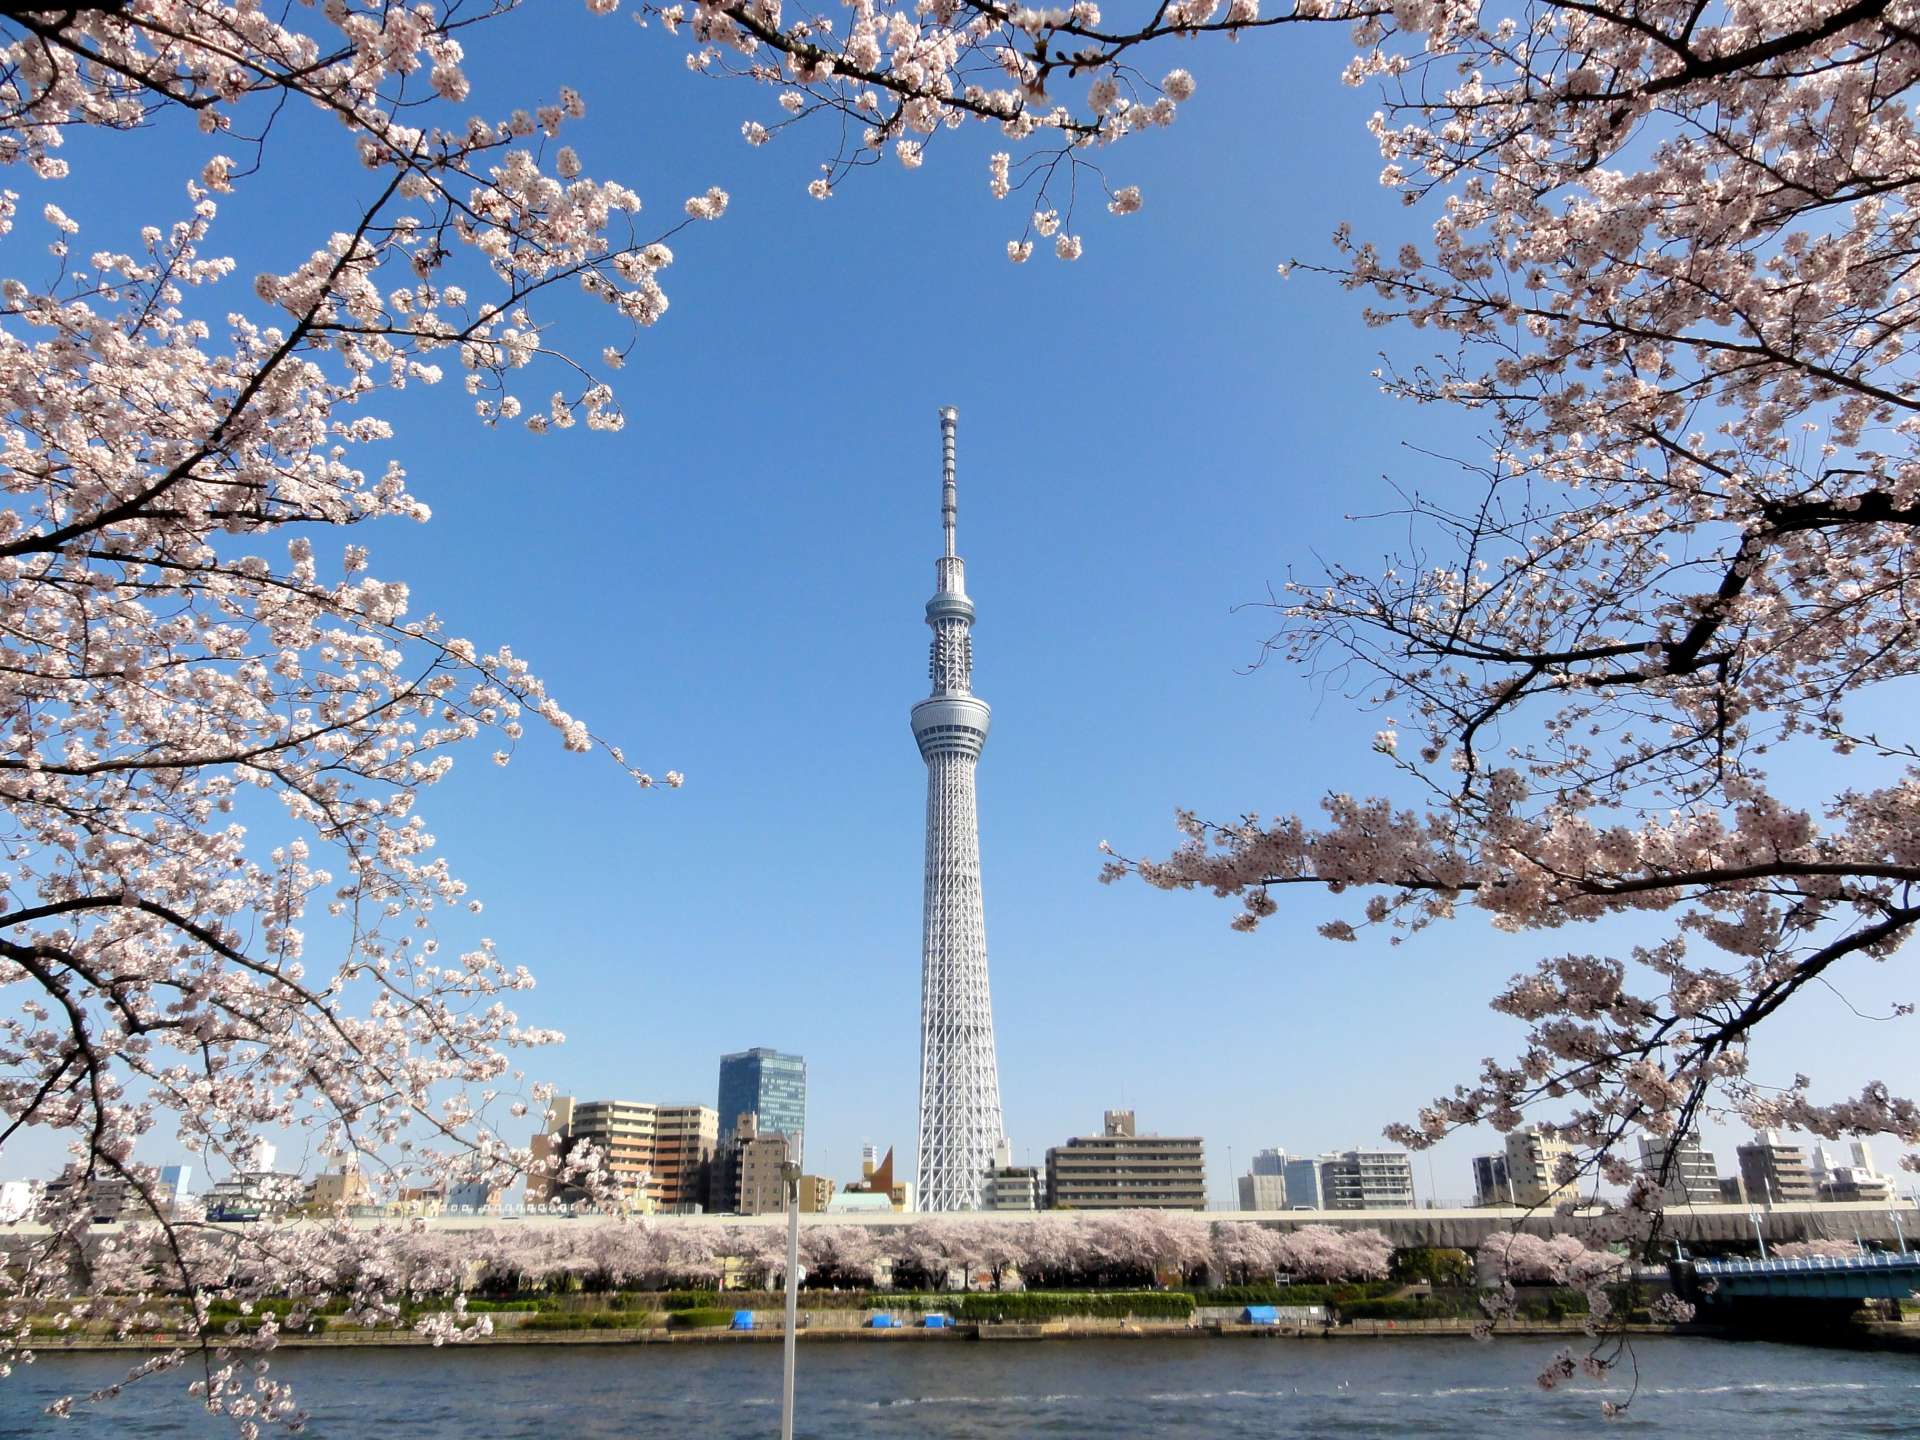 Tokyo・Asakusa Photo spots for cherry blossoms around Tokyo Skytree area. | GOOD LUCK TRIP